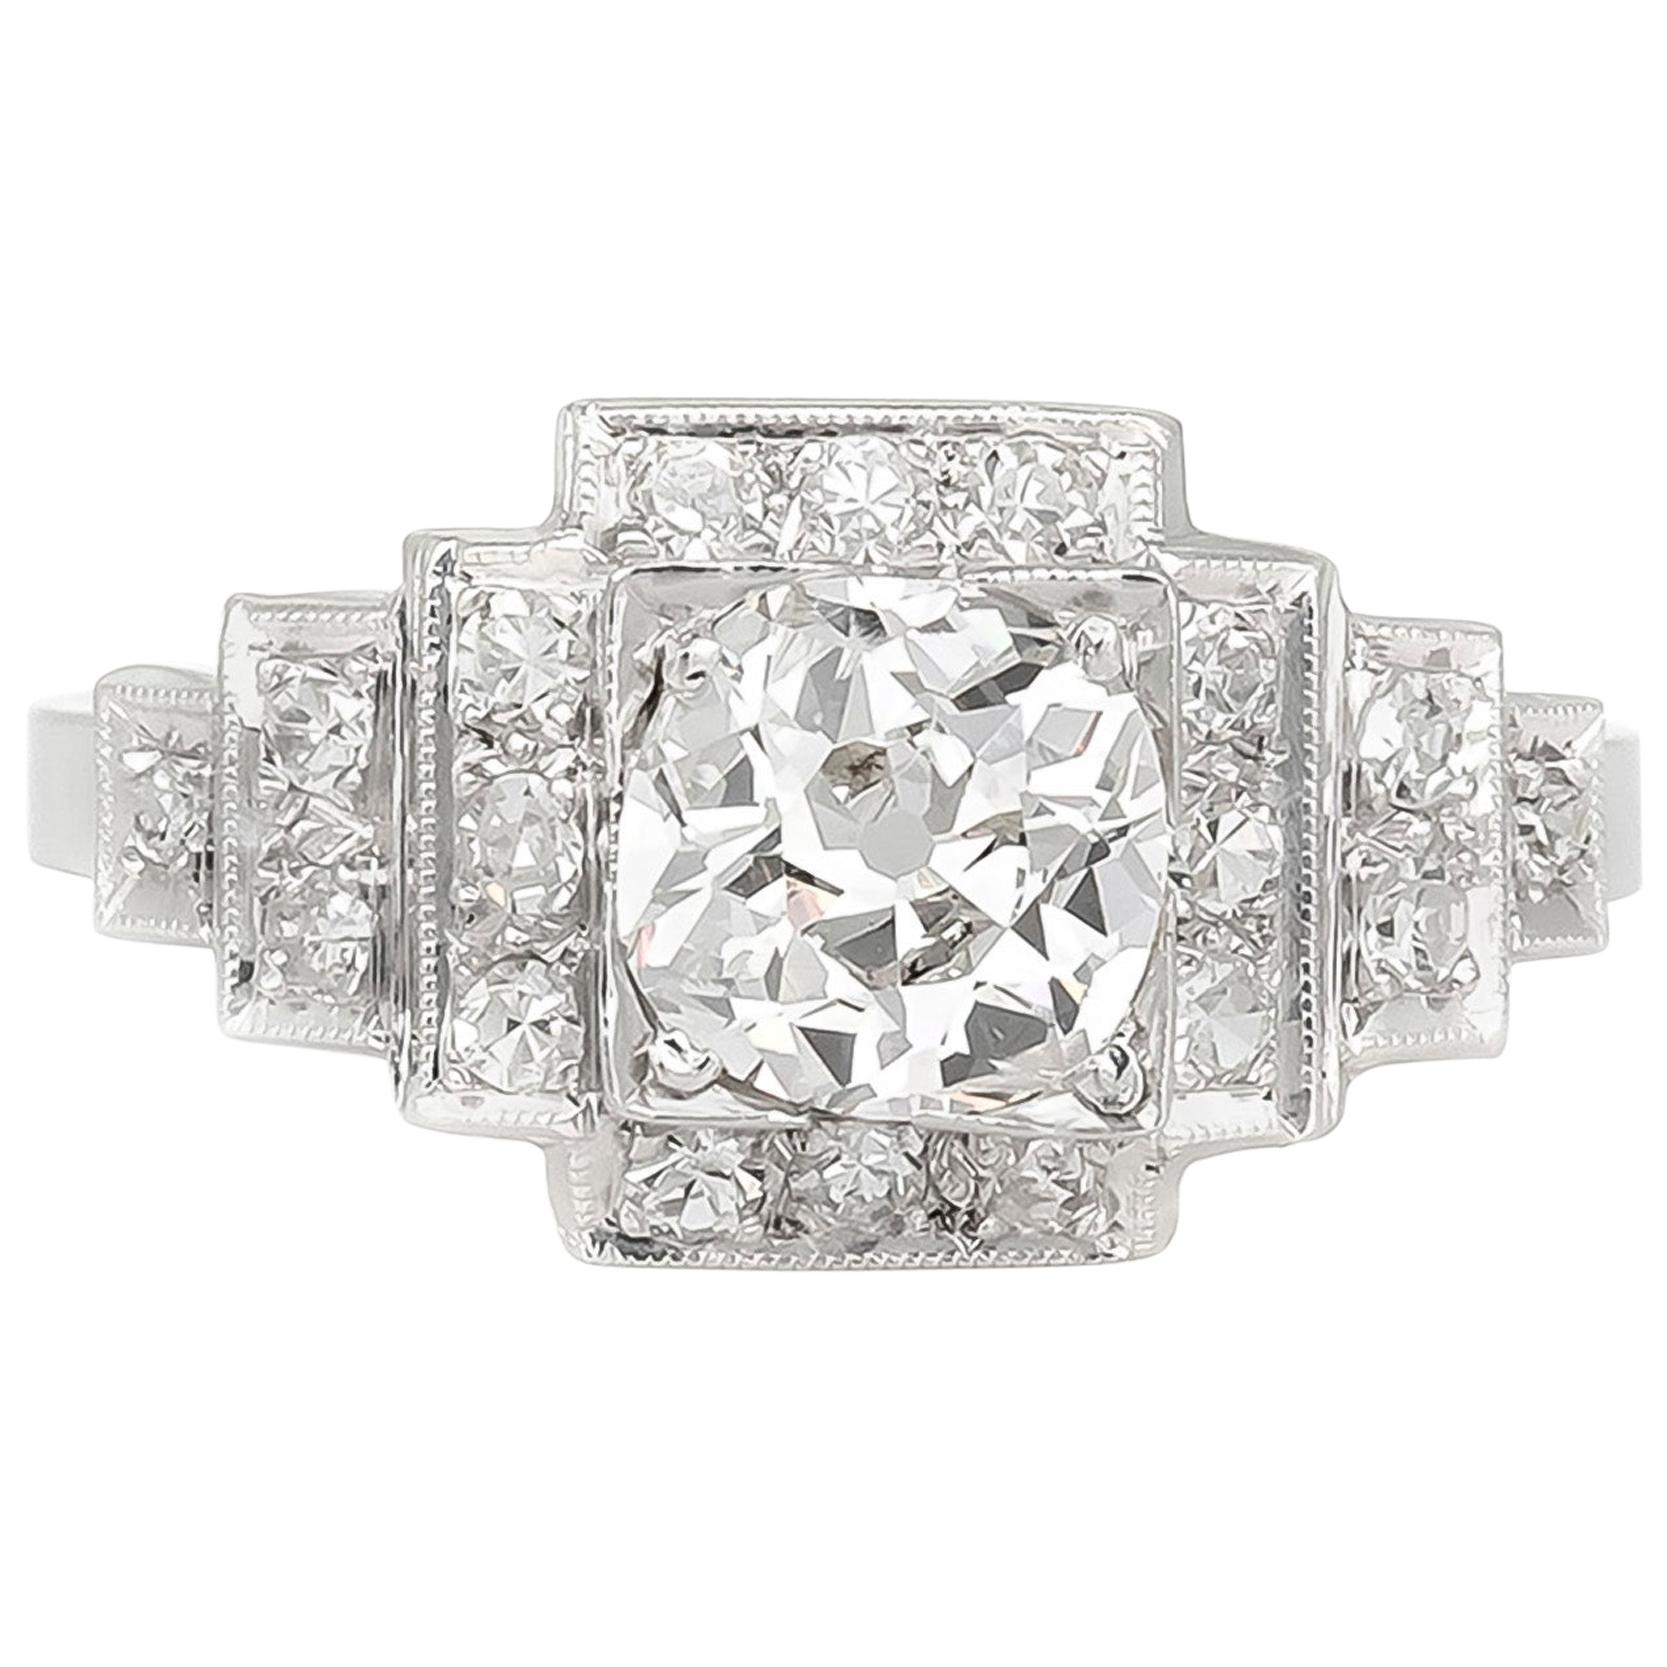 1920s-1930s Pyramid Style Setting Diamond Engagement Ring